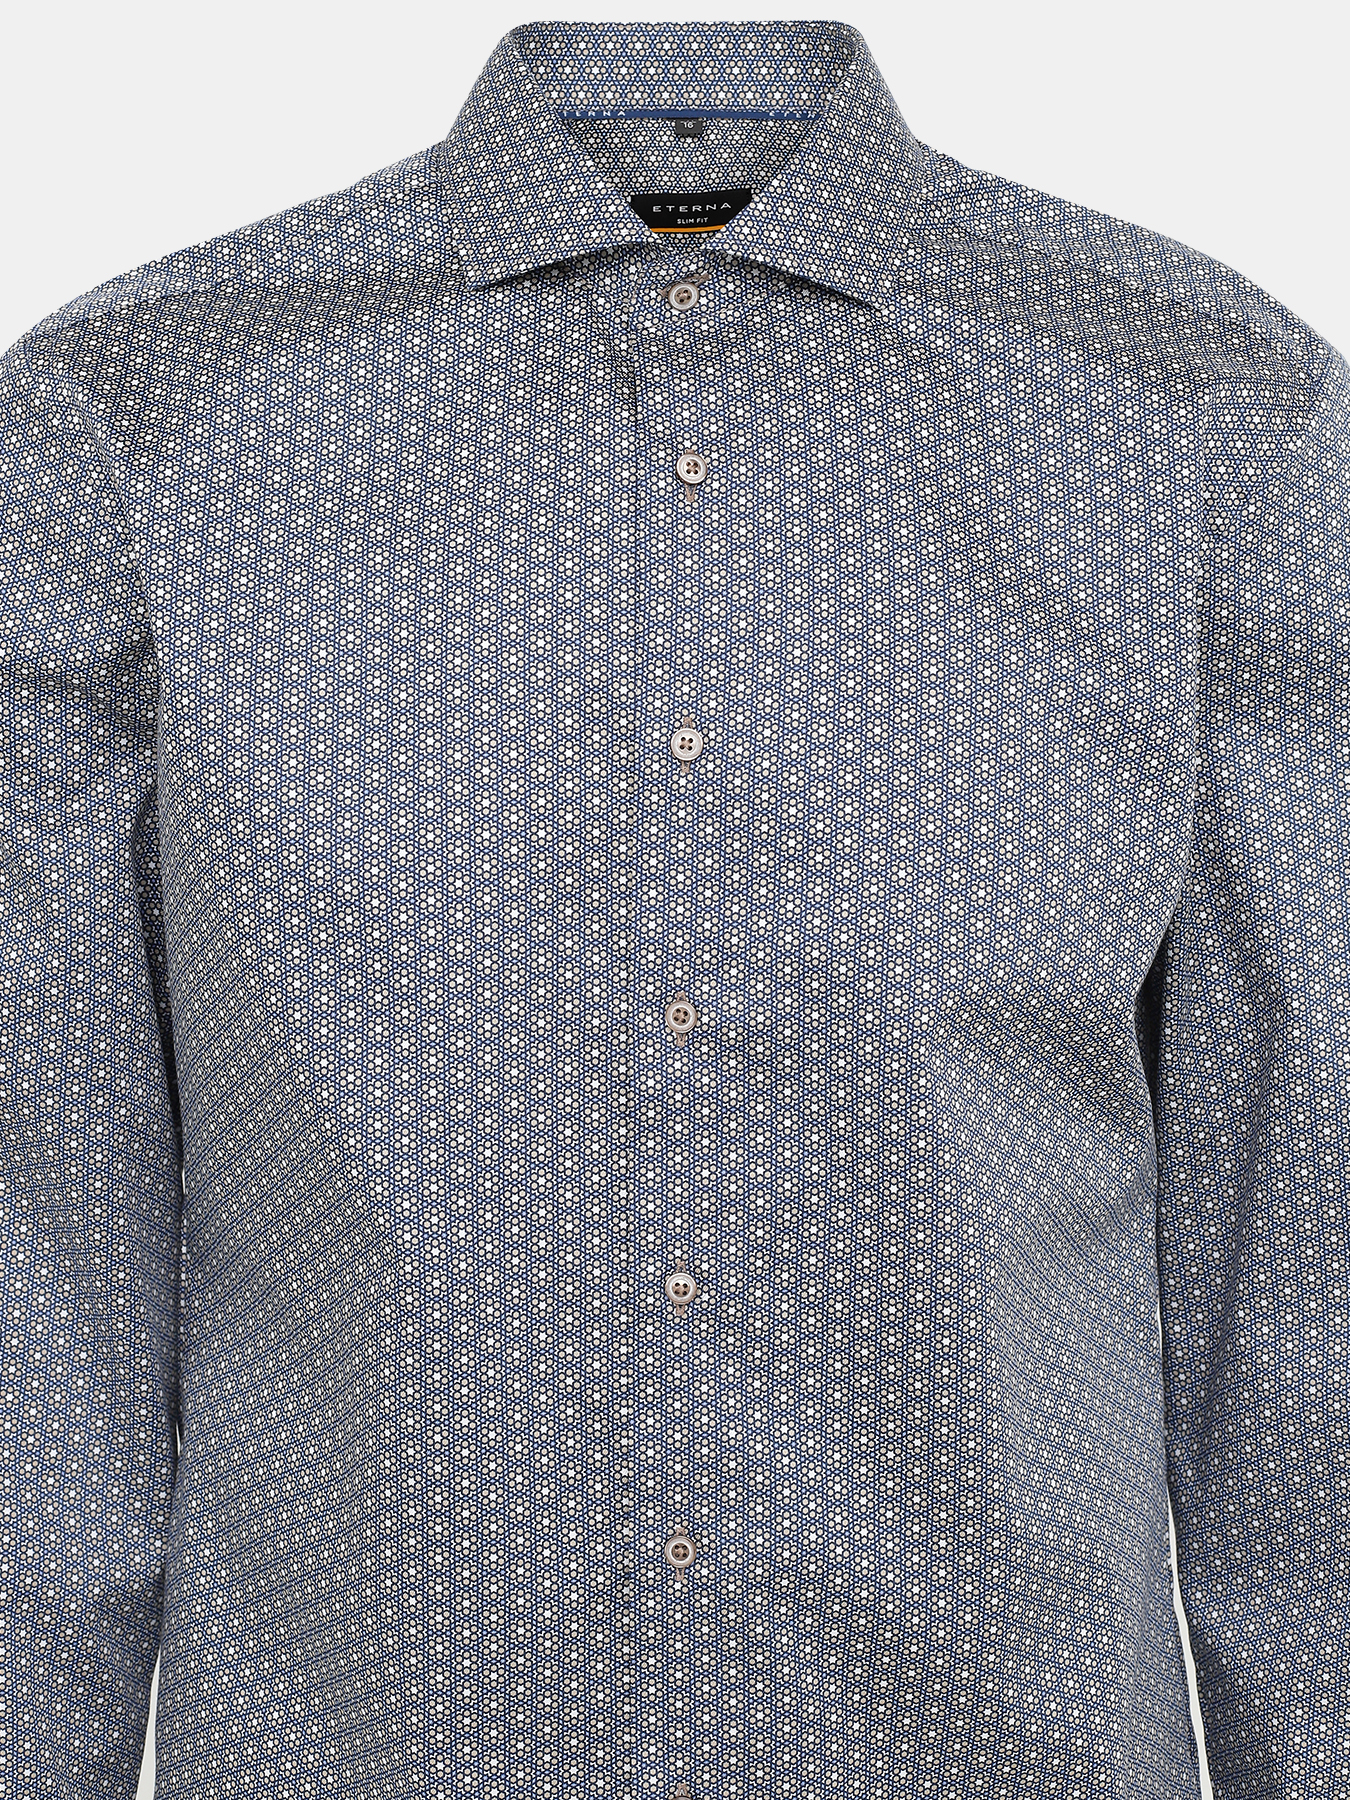 Рубашка Eterna 404866-022, цвет синий, размер 54 - фото 3